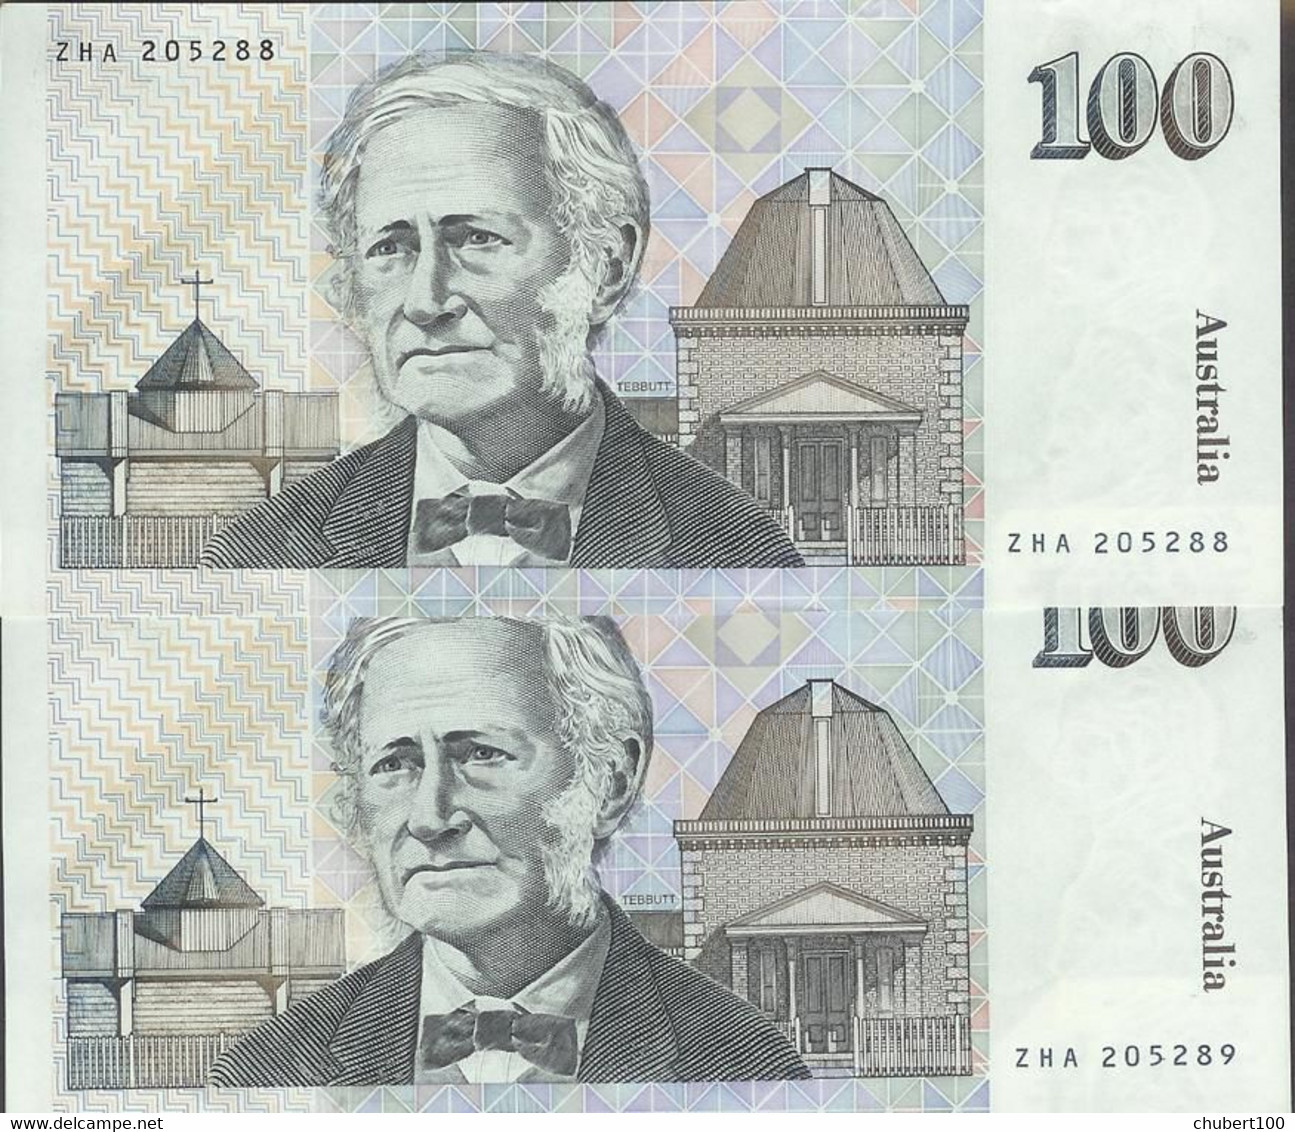 AUSTRALIA, P 48c , 100 Dollars , ND 1990 , Almost UNC , 2 Consecutive Notes - 1974-94 Australia Reserve Bank